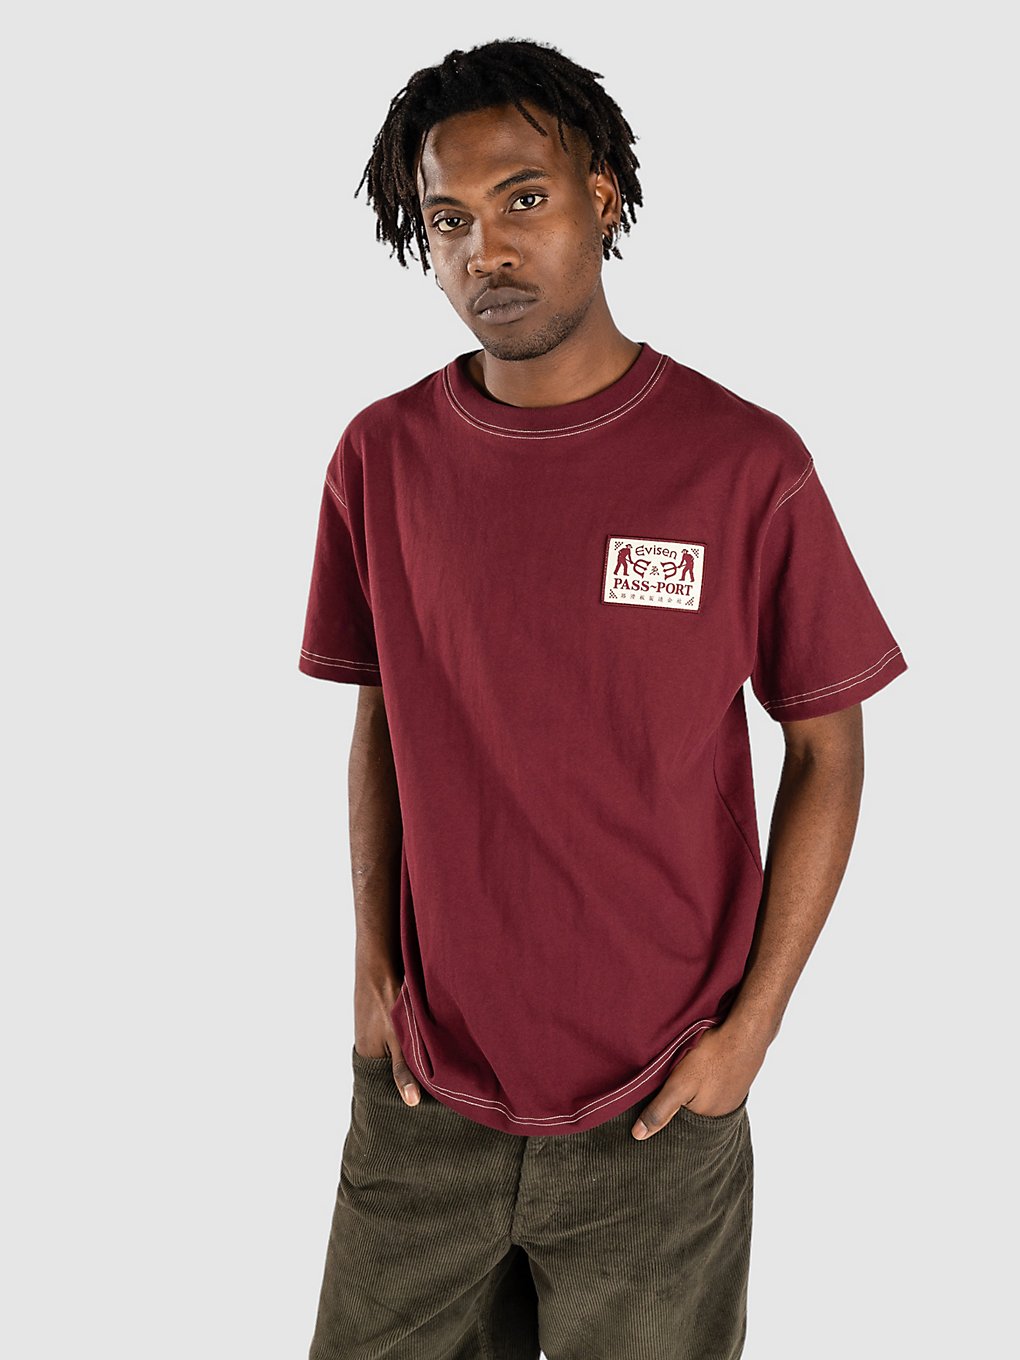 Pass Port Logo Lock Up T-Shirt burgundy kaufen